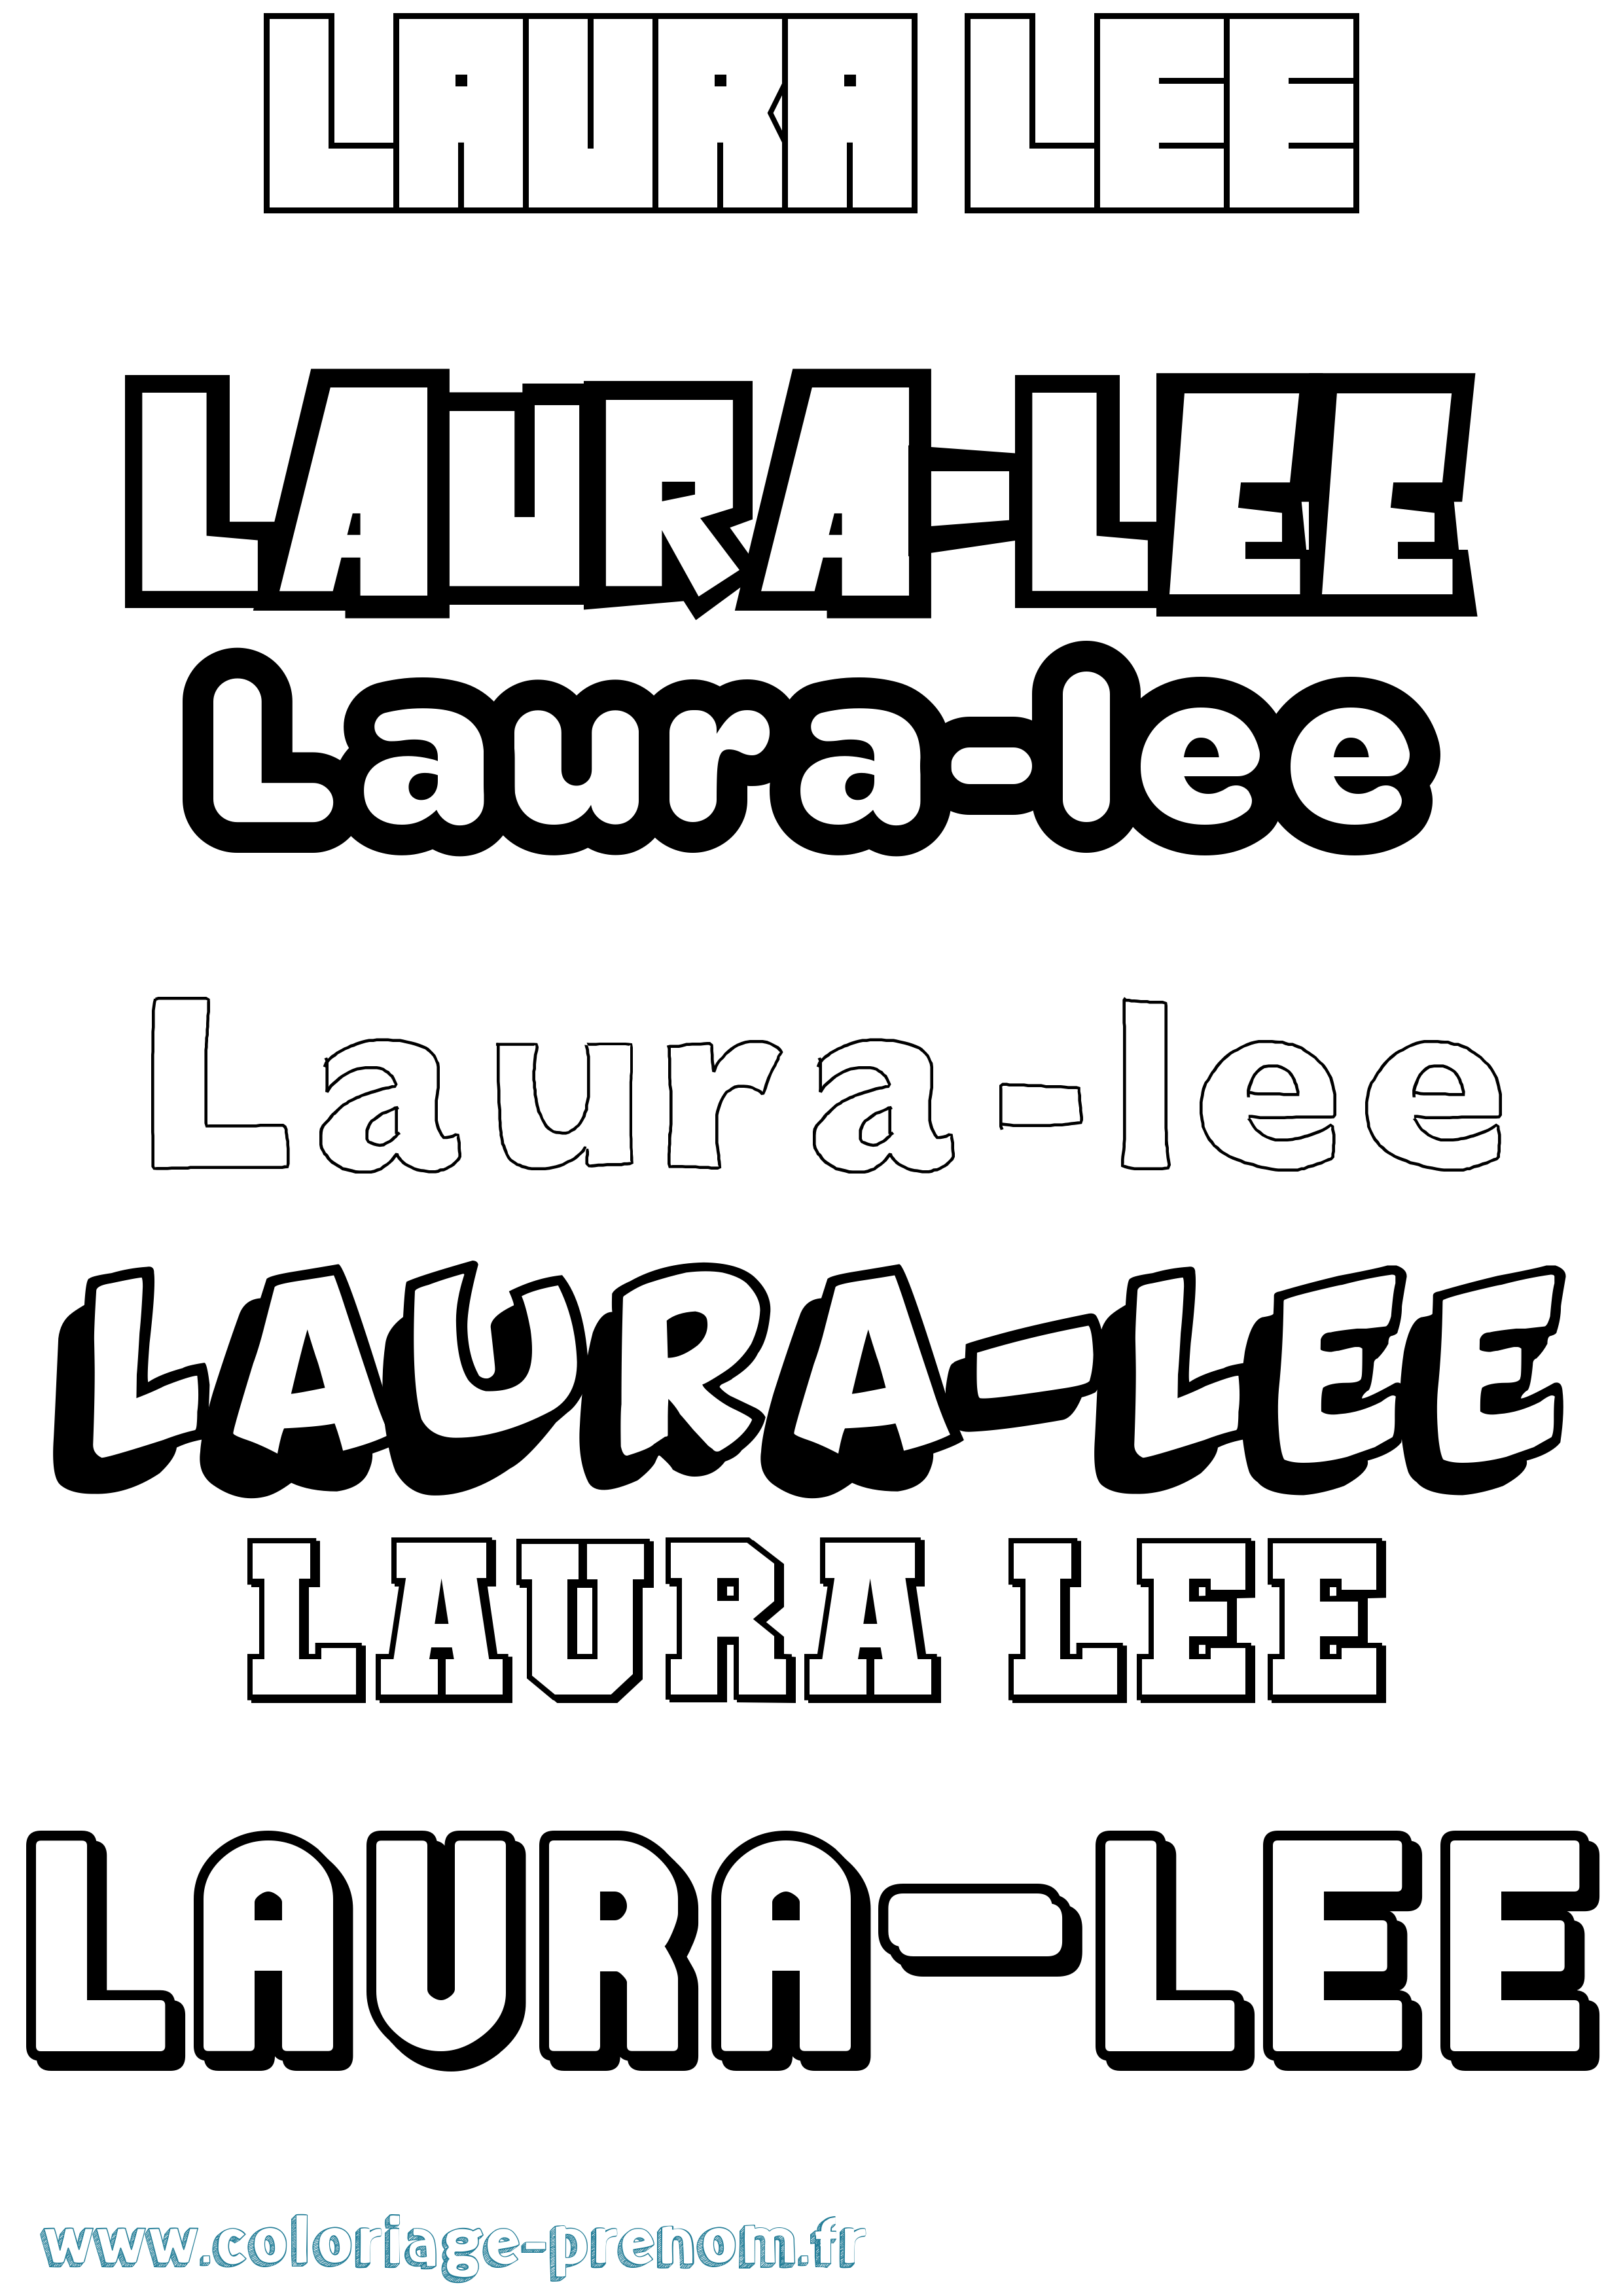 Coloriage prénom Laura-Lee Simple